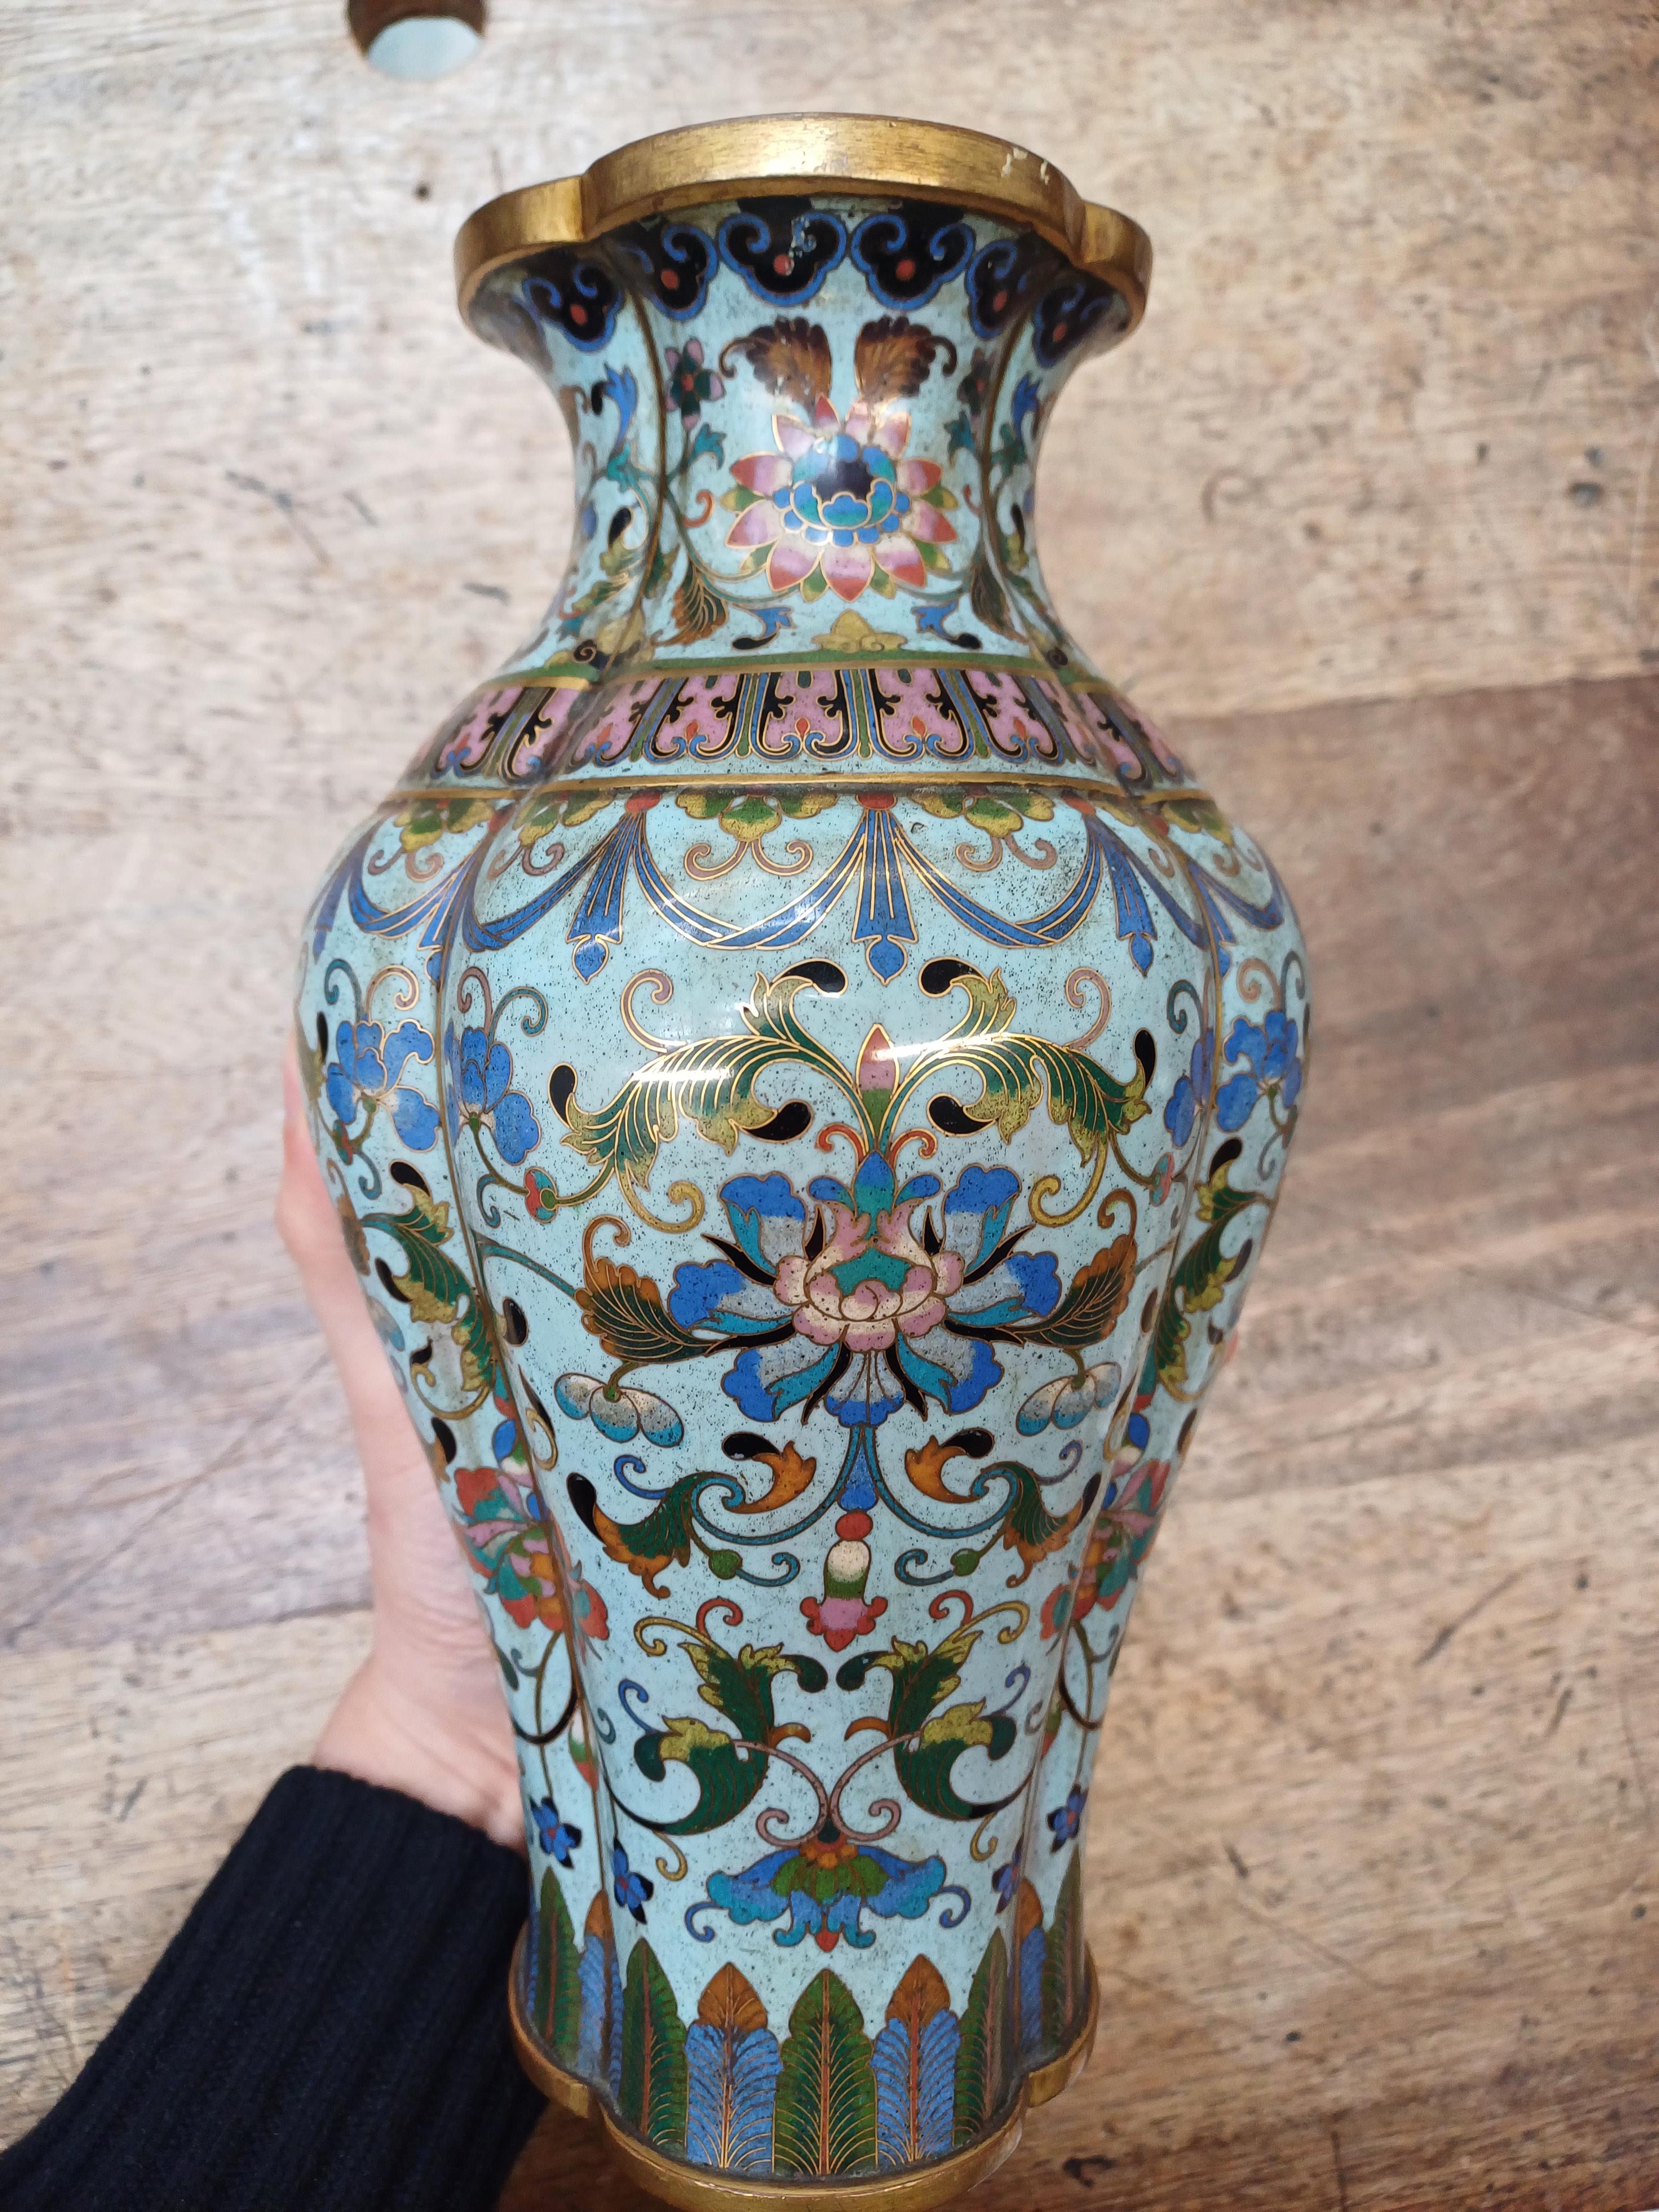 A PAIR OF CHINESE CLOISONNÉ ENAMEL VASES 清十八世紀 銅胎掐絲琺瑯番蓮紋瓶一對 - Image 5 of 17